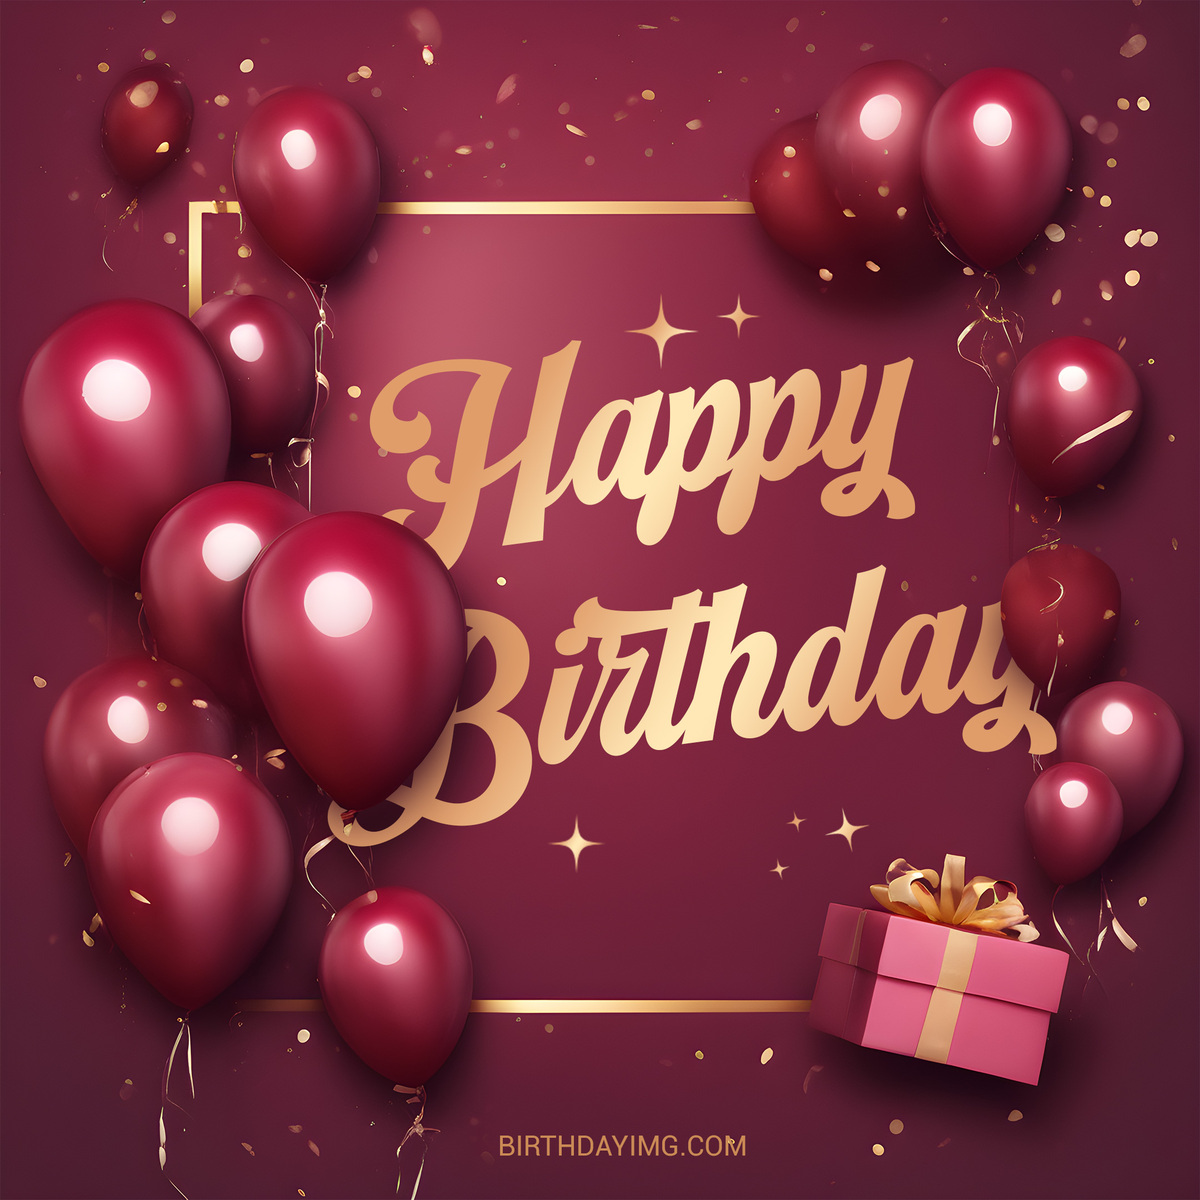 Free Happy Birthday with Balloons and Confetti - birthdayimg.com